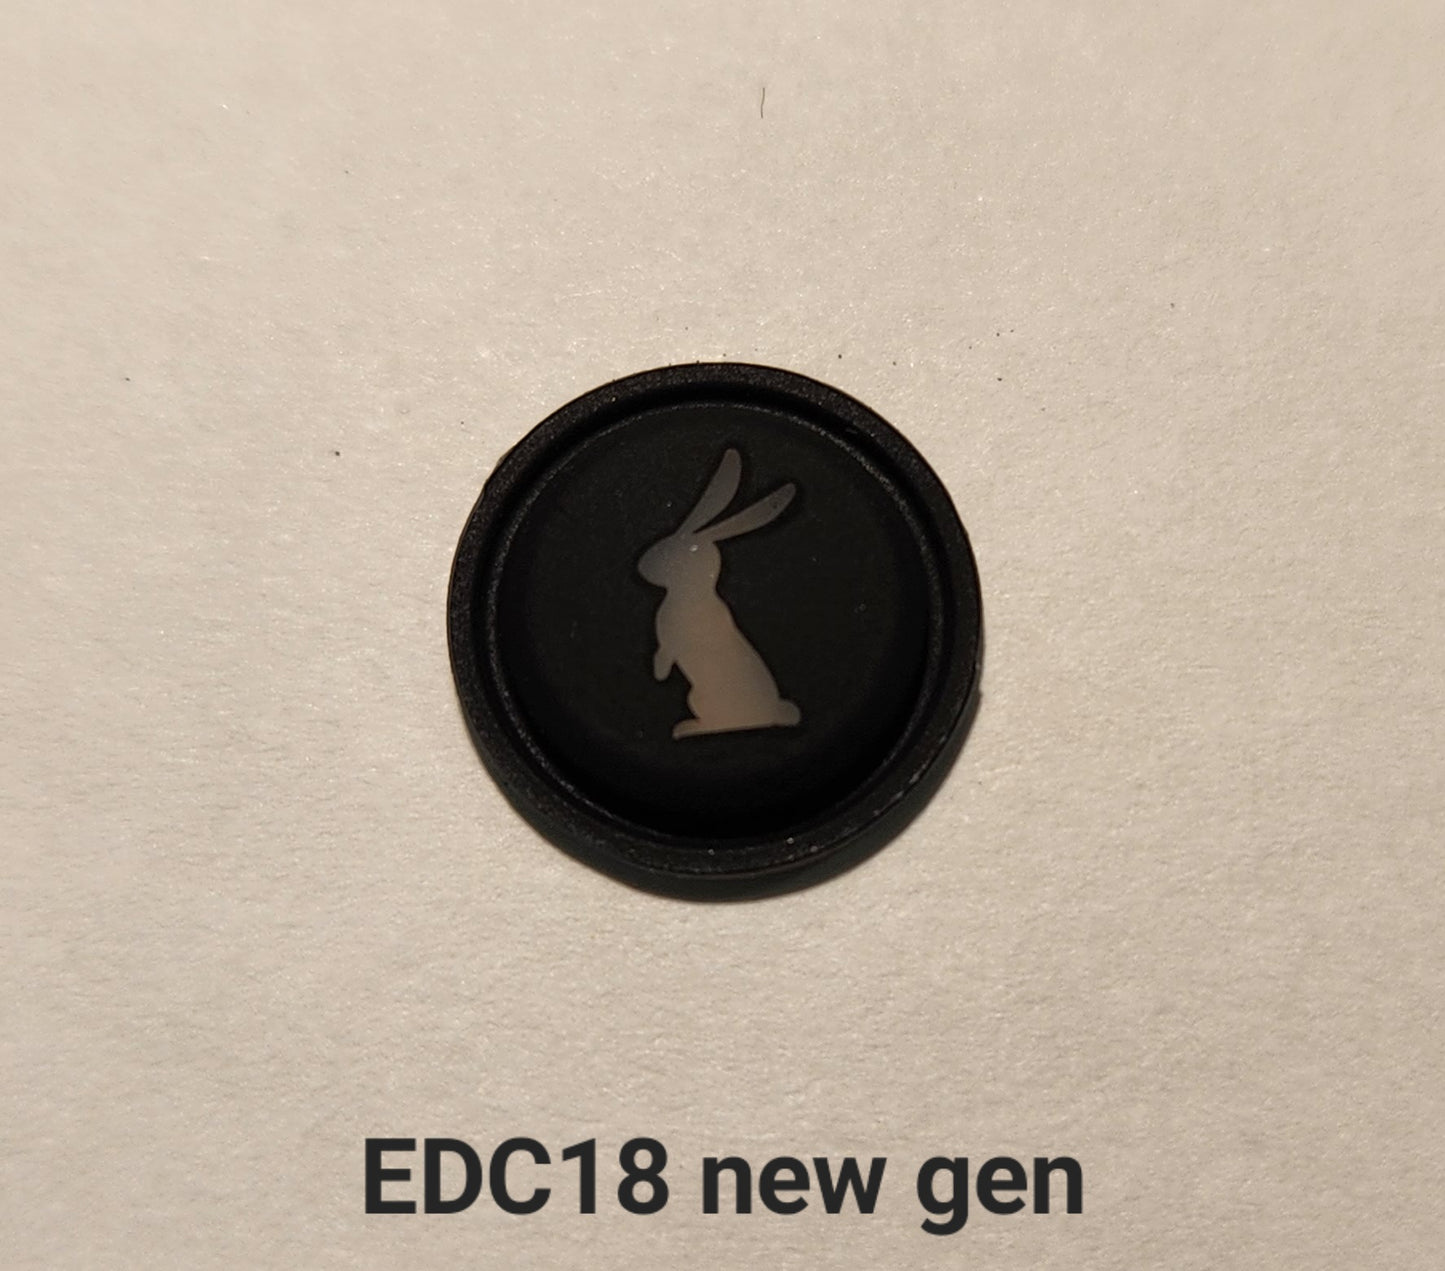 Lumintop Flashlight Replacement Rubber Button EDC18 (NEW GEN WITH LUMINTOP LOGO)